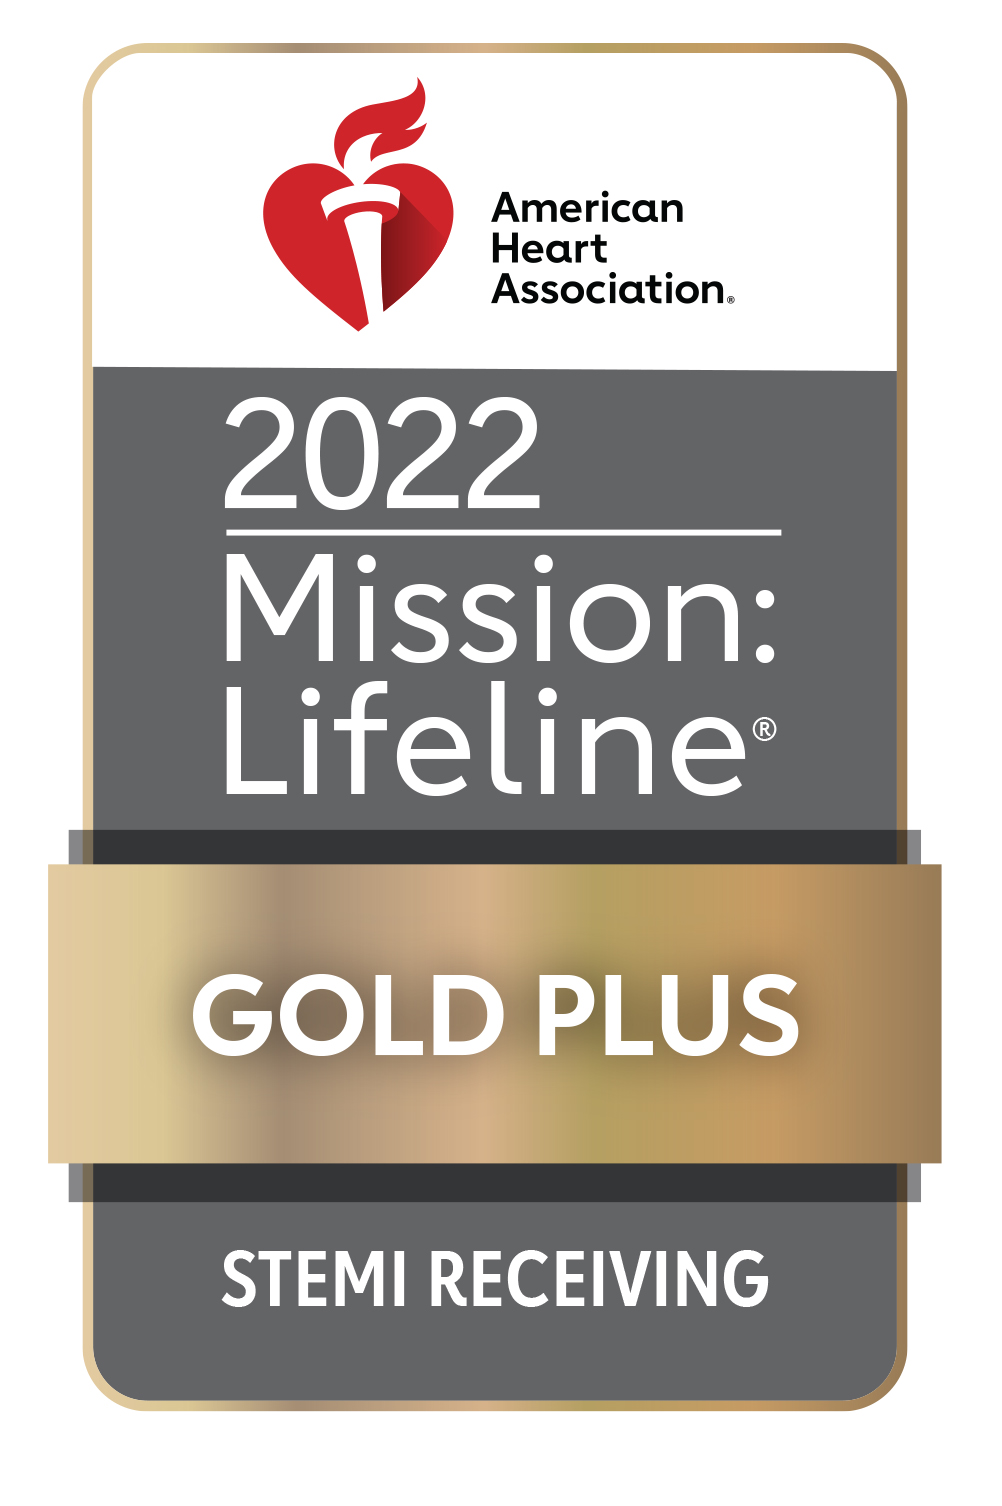 Mission_Lifeline_Award_(AHA)_MO_Phelps_Health